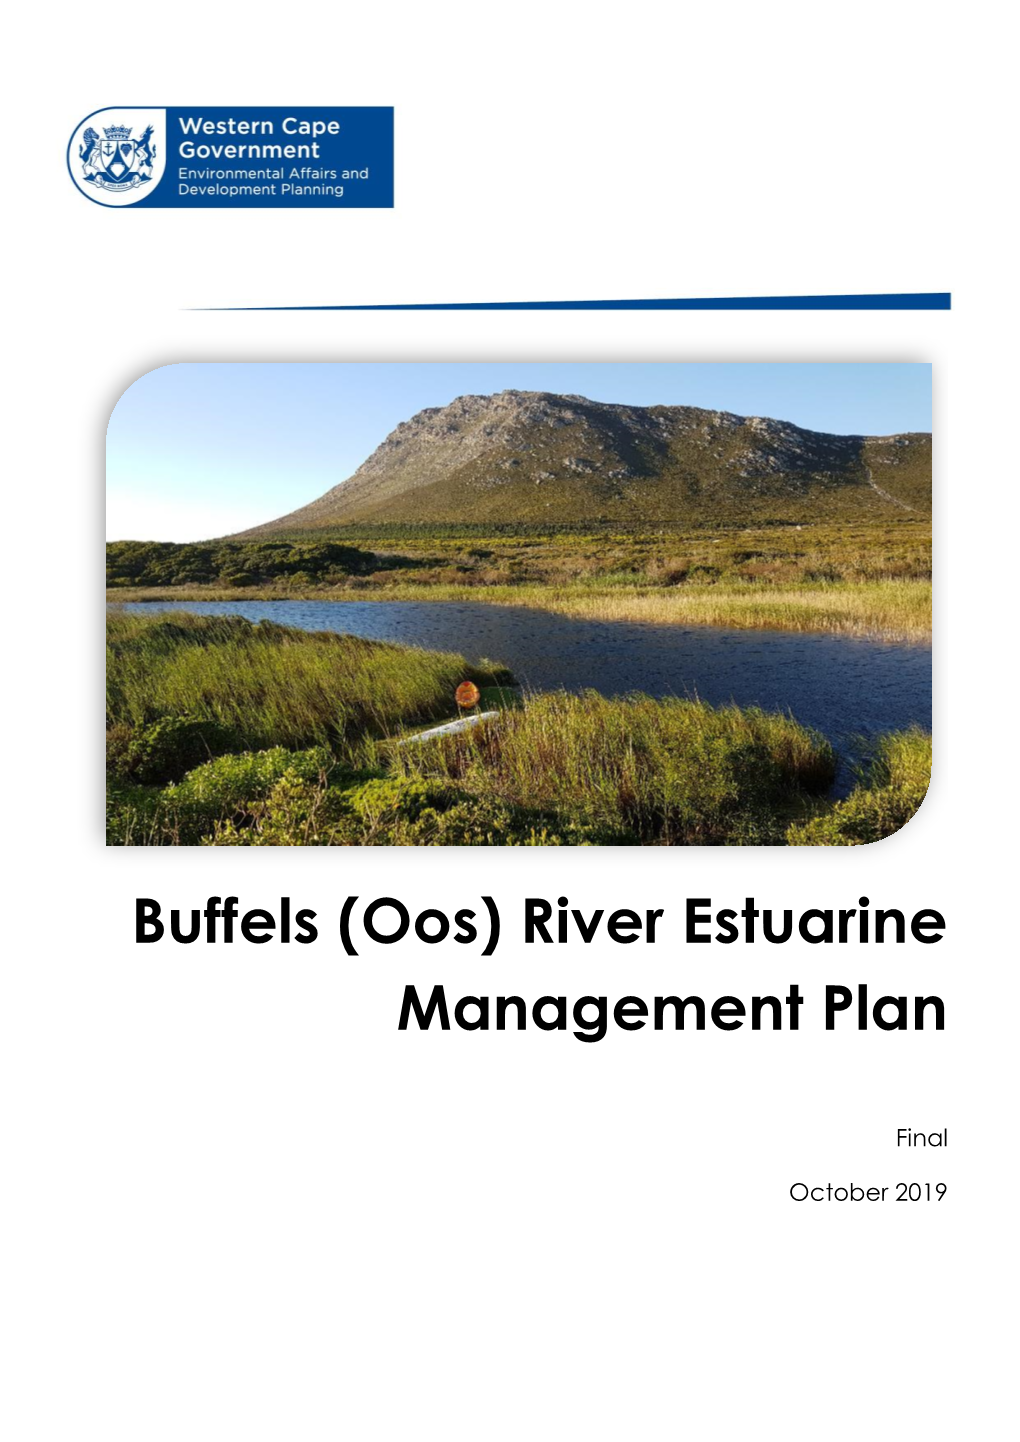 Buffels (Oos) River Estuarine Management Plan